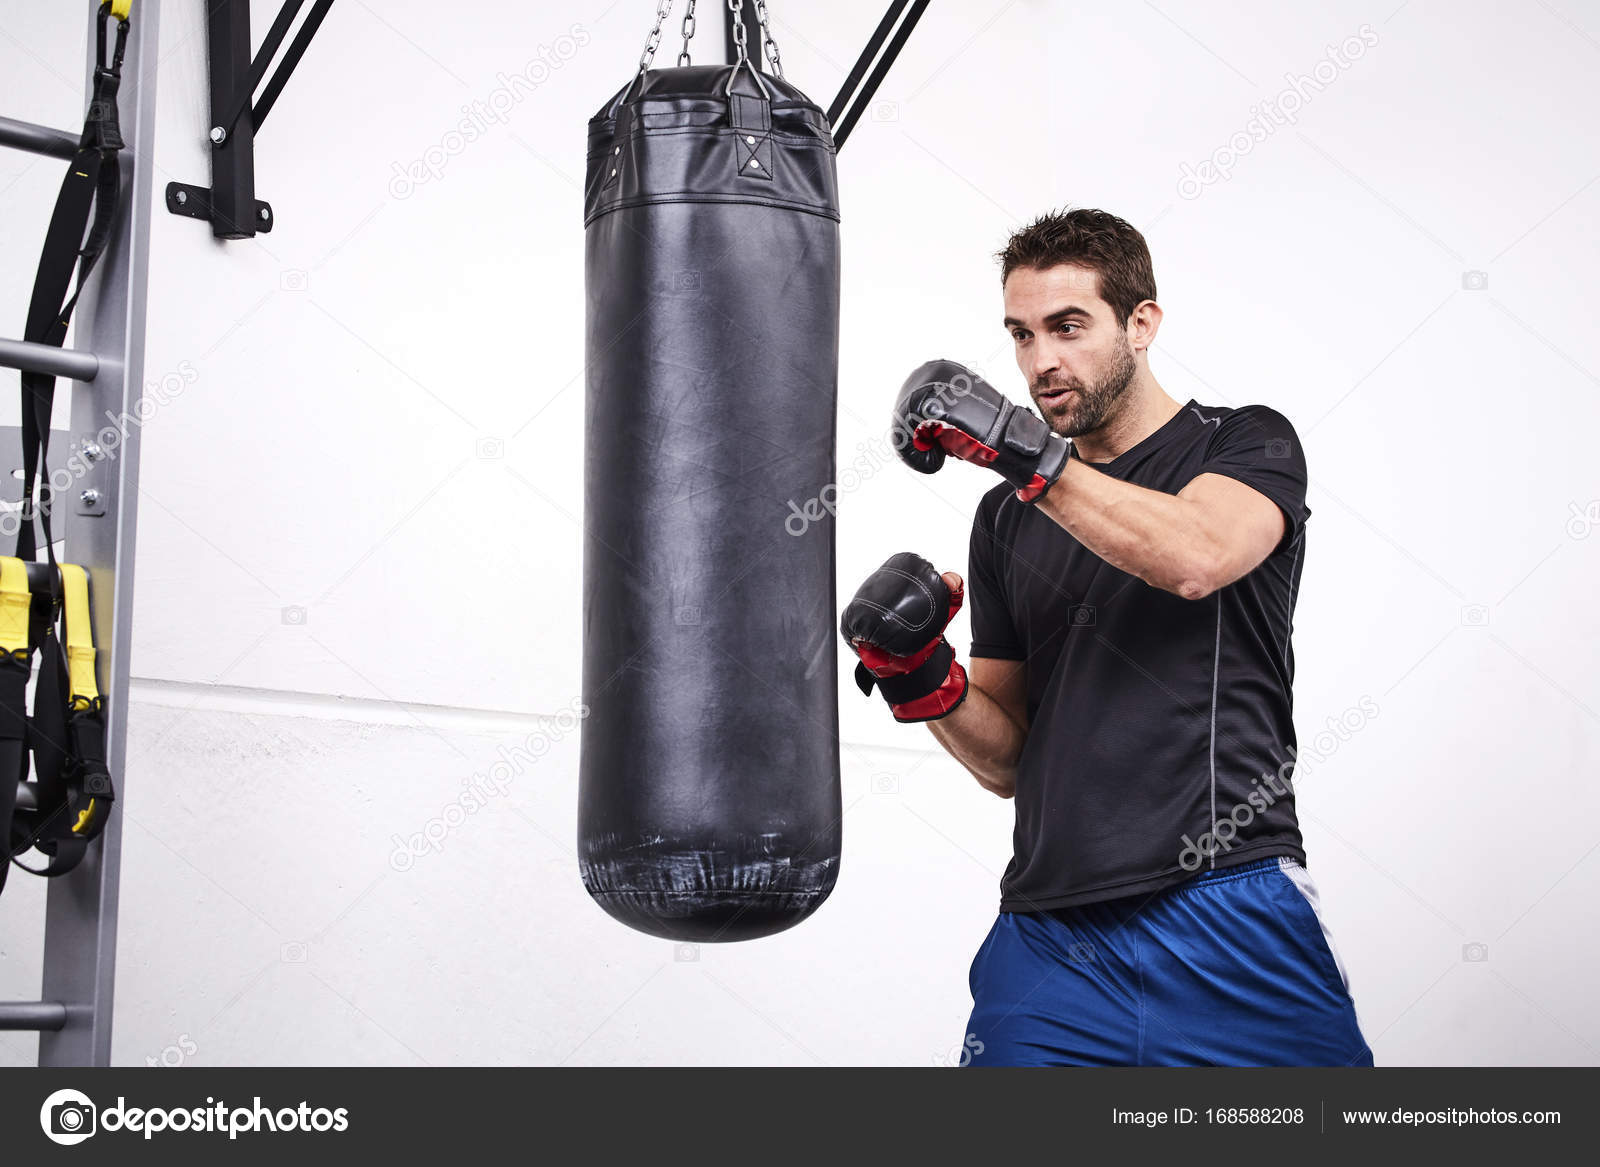 RDX F6 4ft / 5ft 2-in-1 KARA Training Punching Bag Set | RDX® Sports US